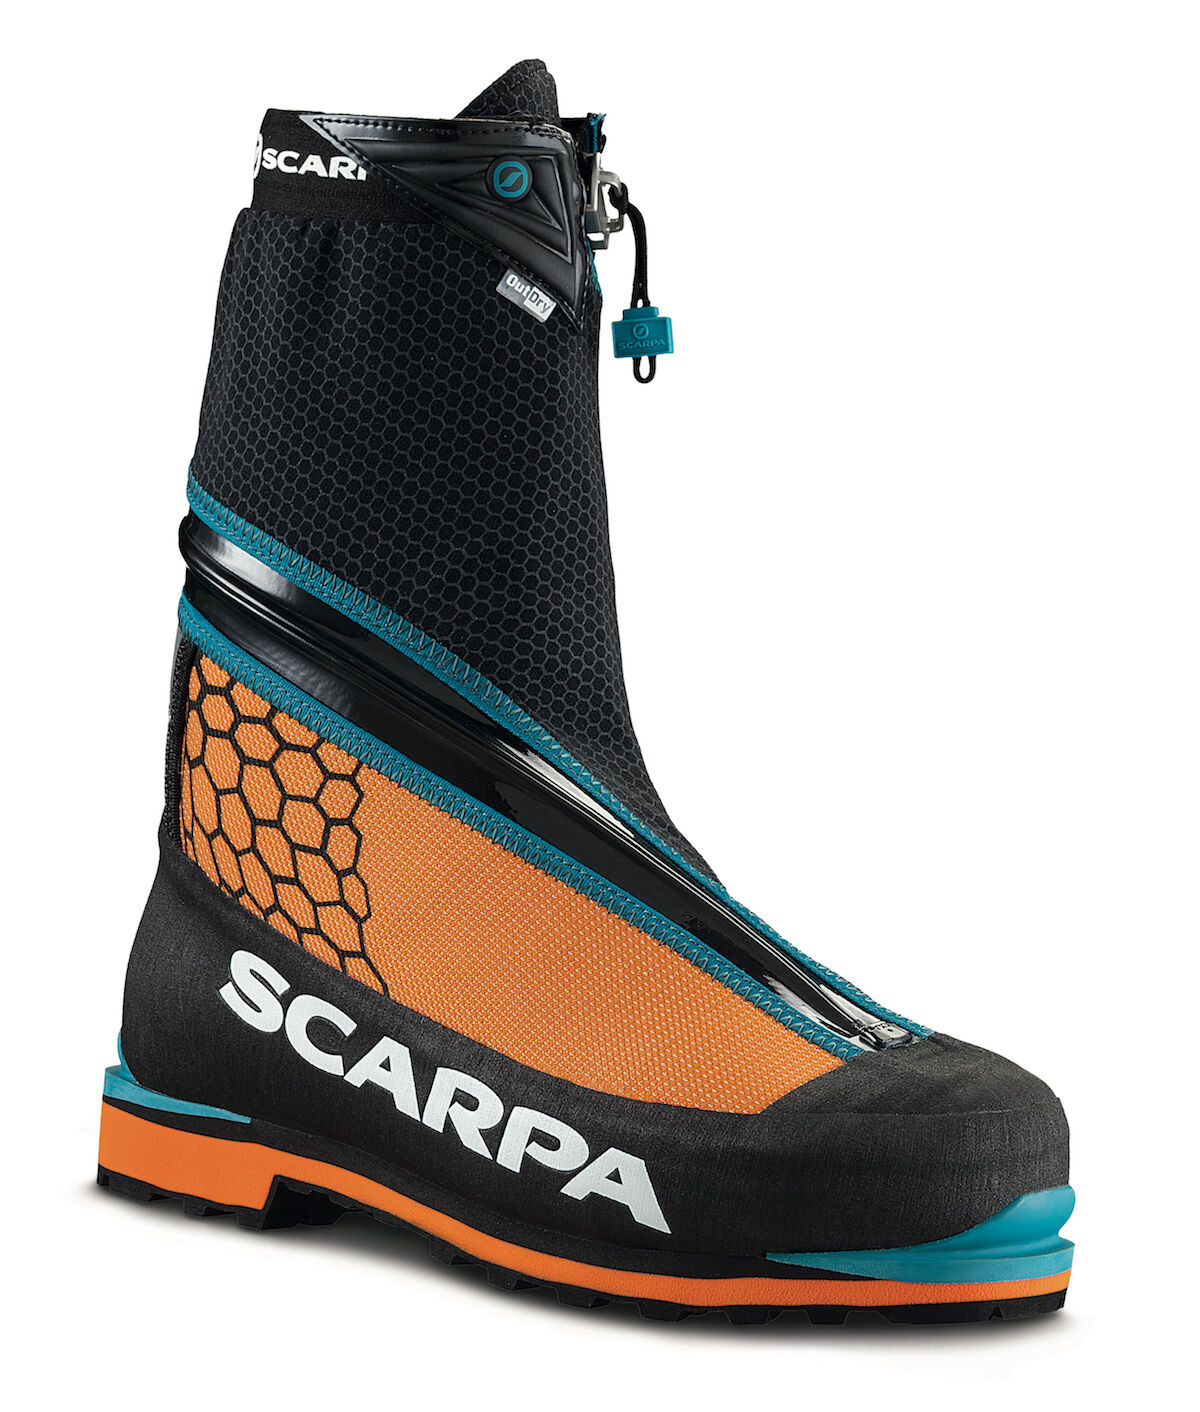 Scarpa - Phantom Tech - Mountaineering Boots - Men's